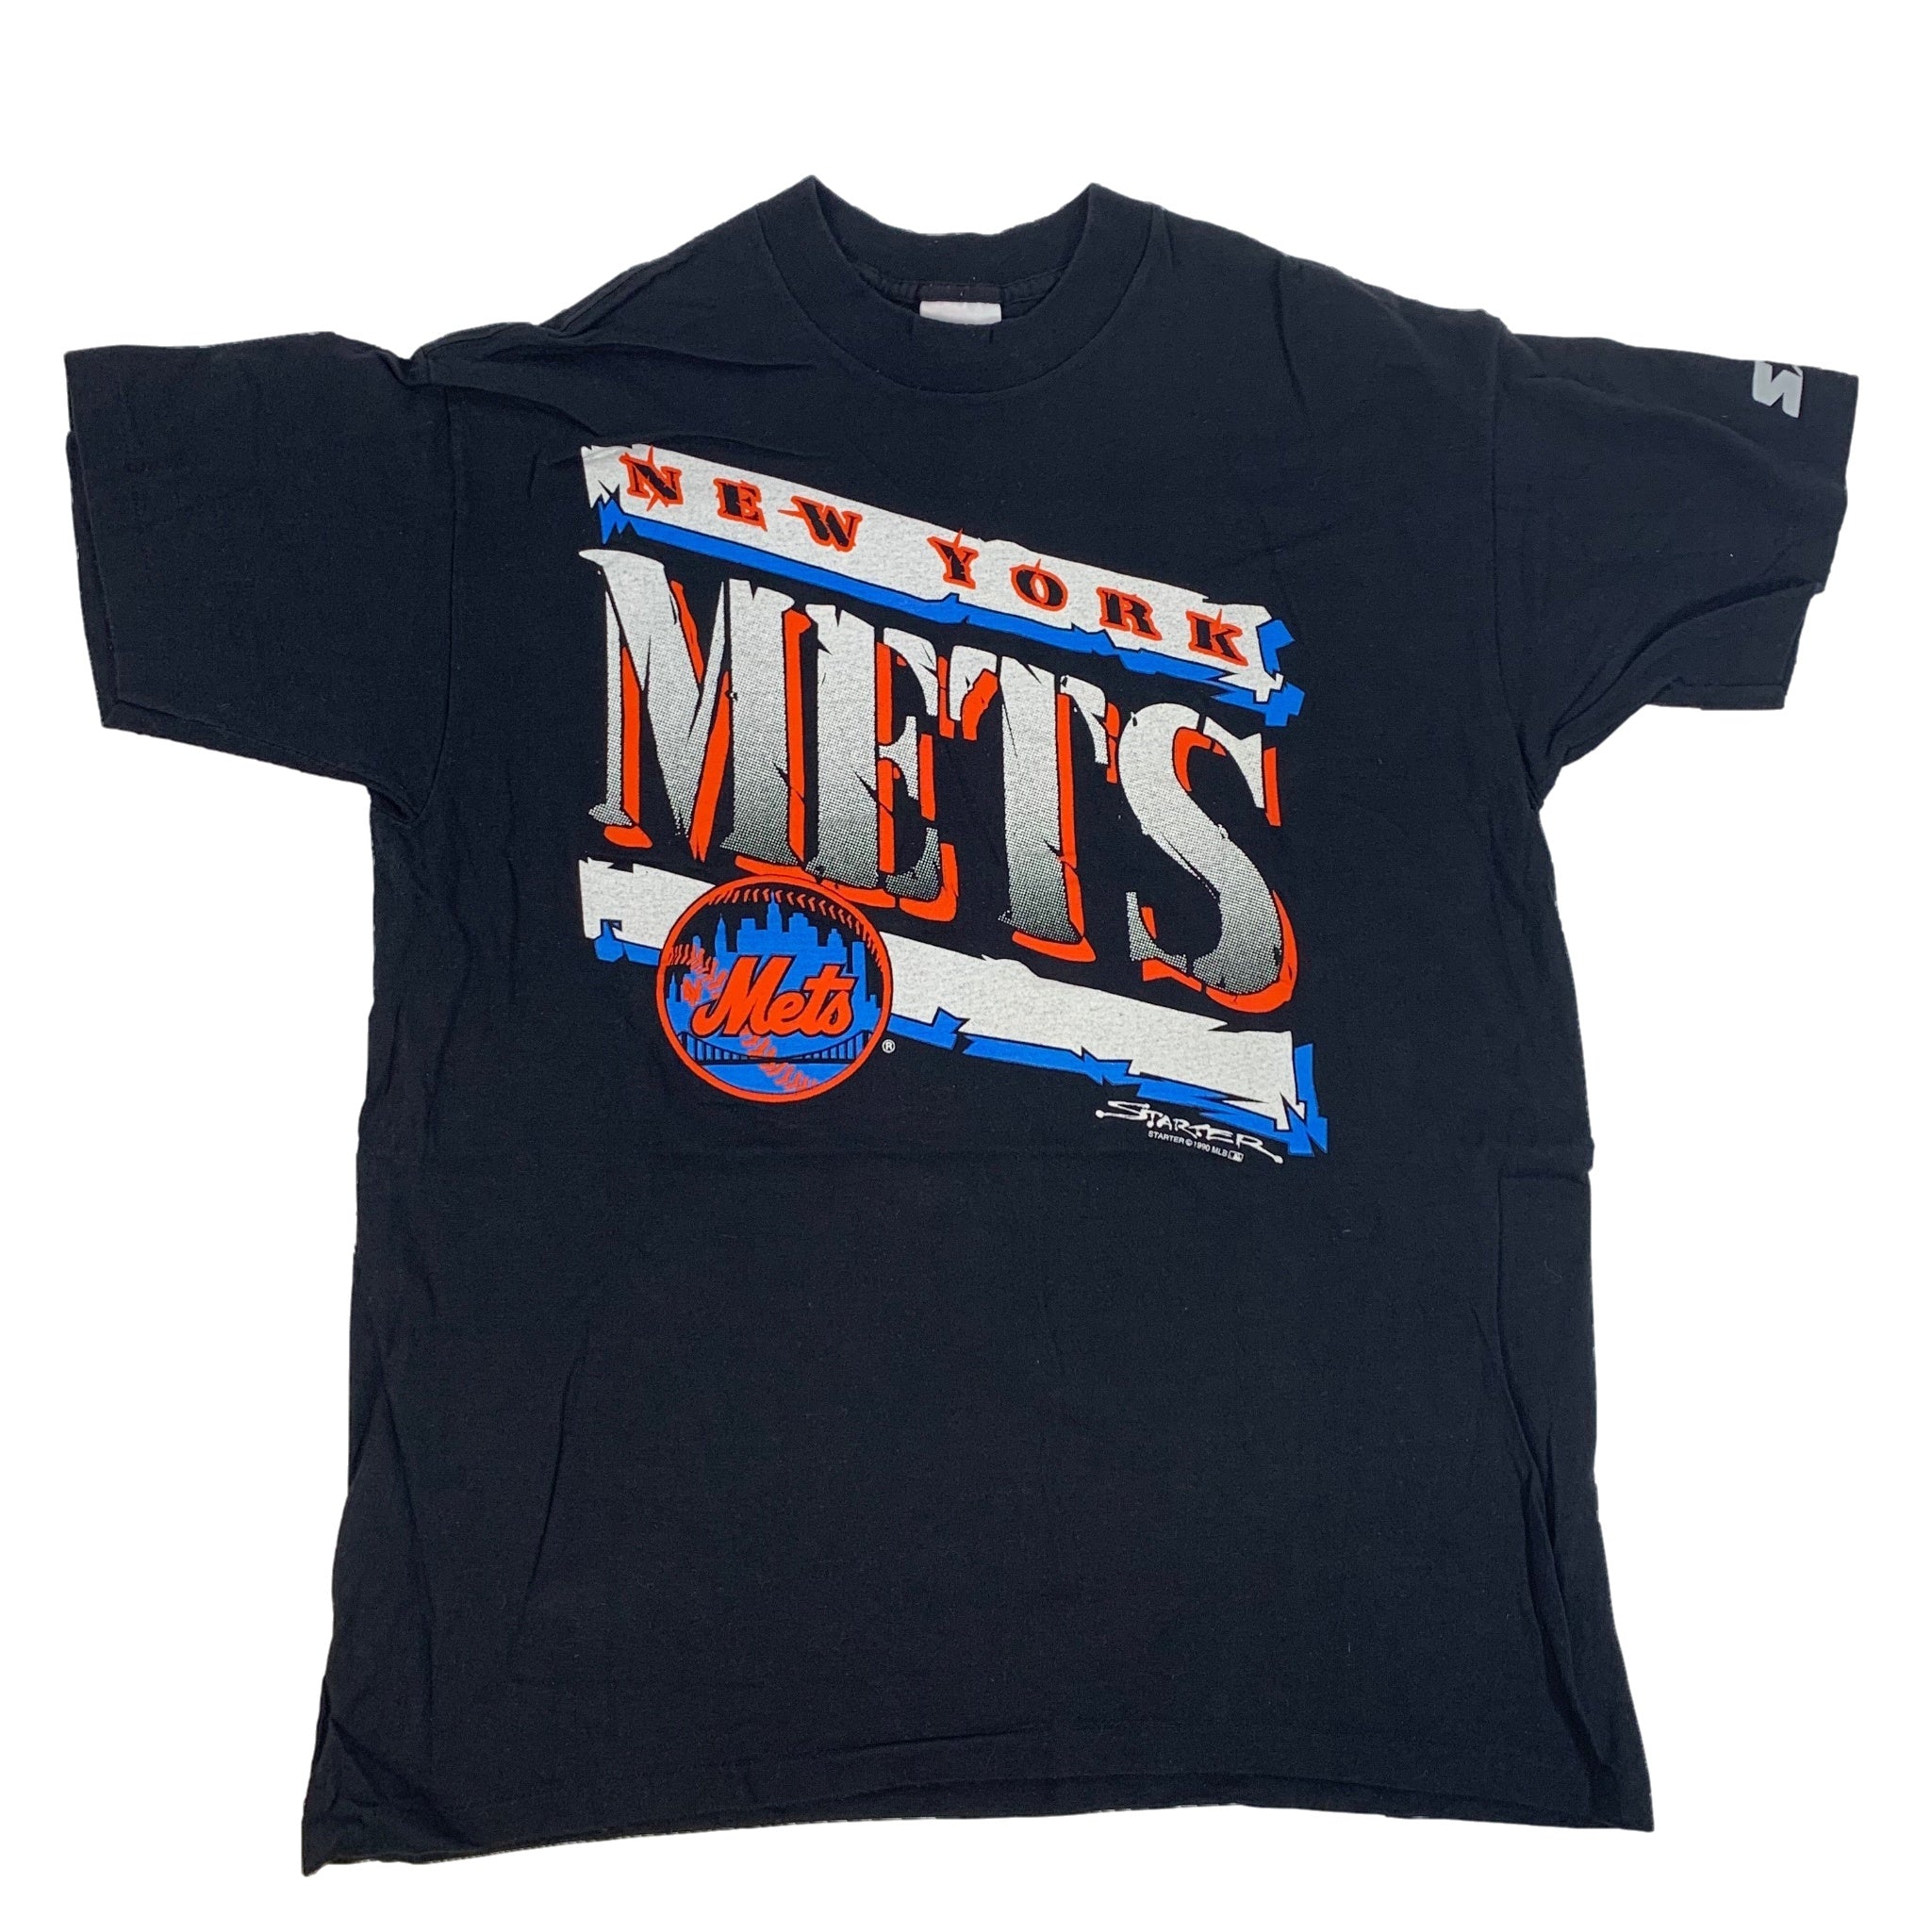 new york mets t shirts